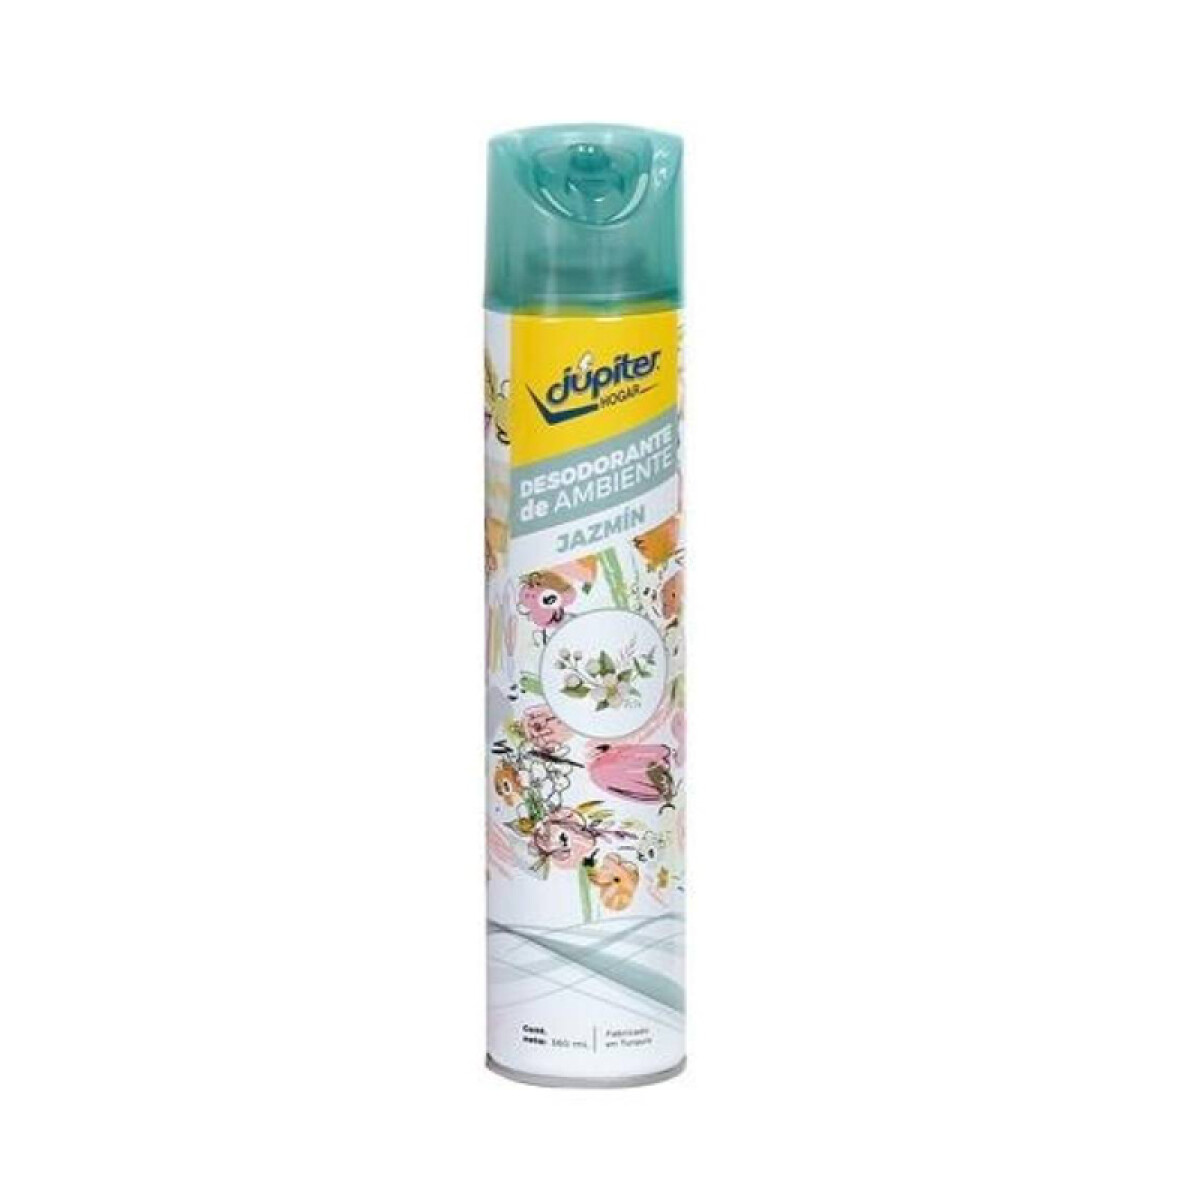 Desodorante de Ambiente JUPITER 360ml - Jazmin 